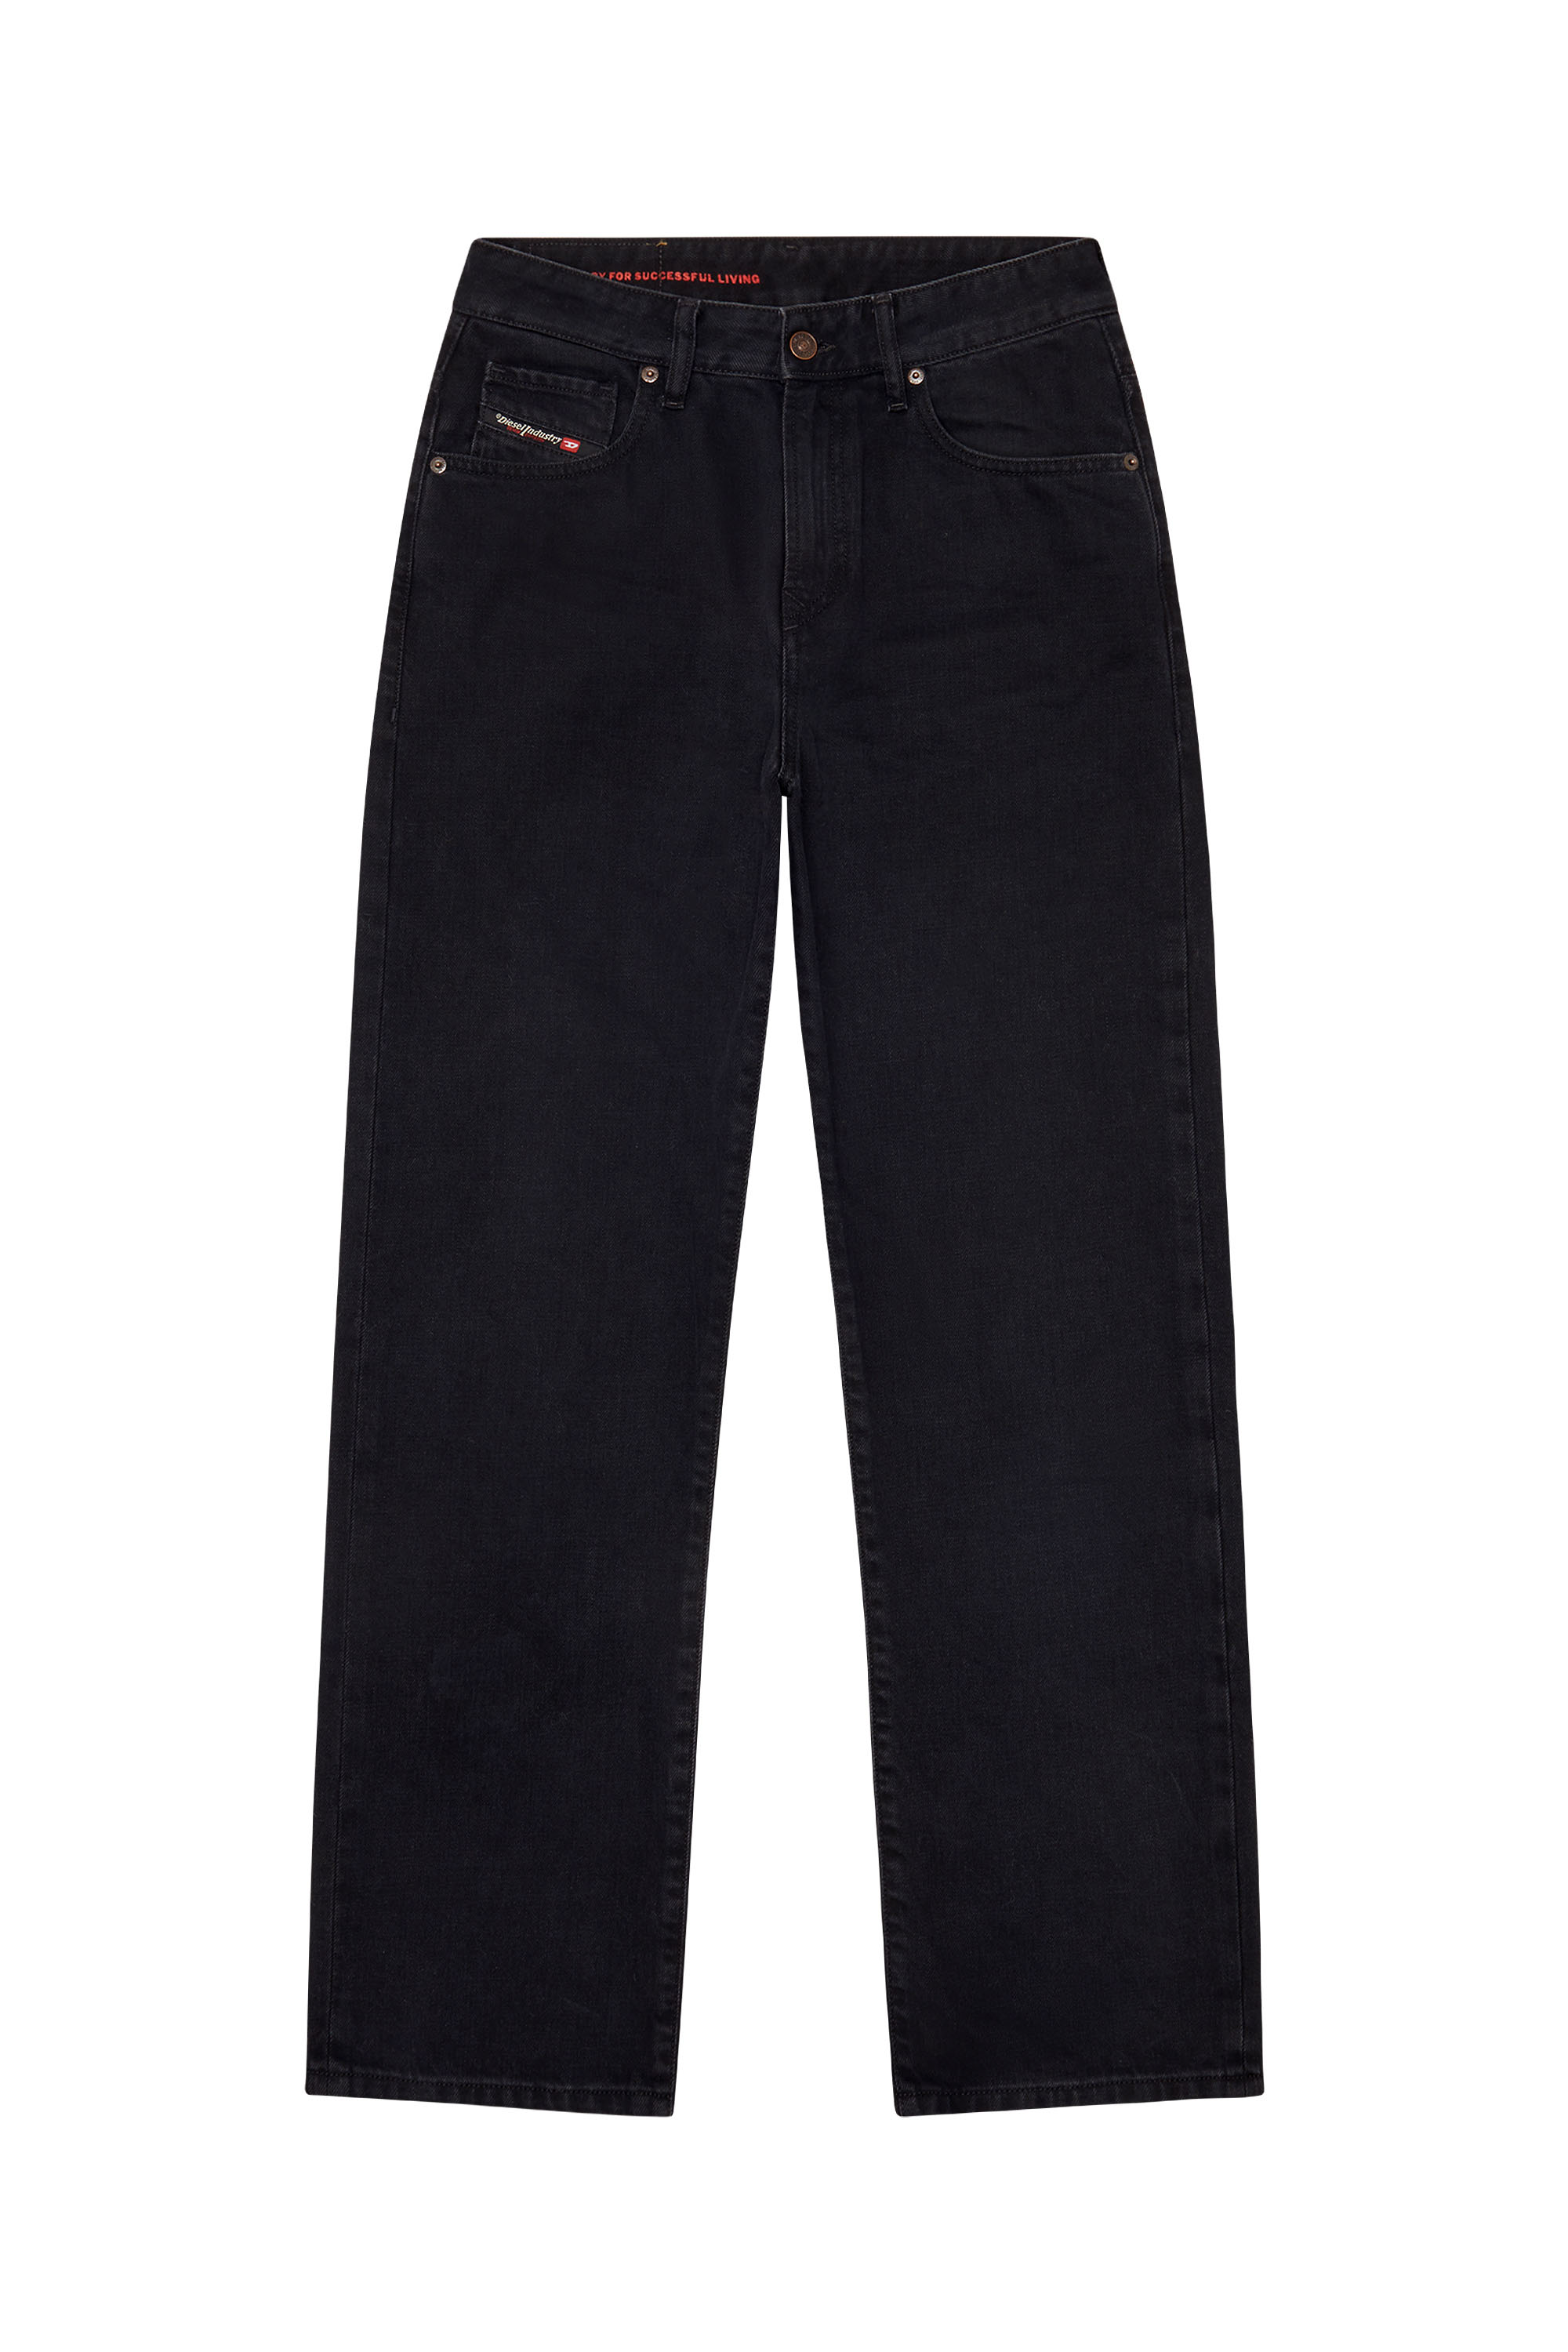 1999 D-REGGY Z09RL Straight Jeans, Black/Dark grey - Jeans